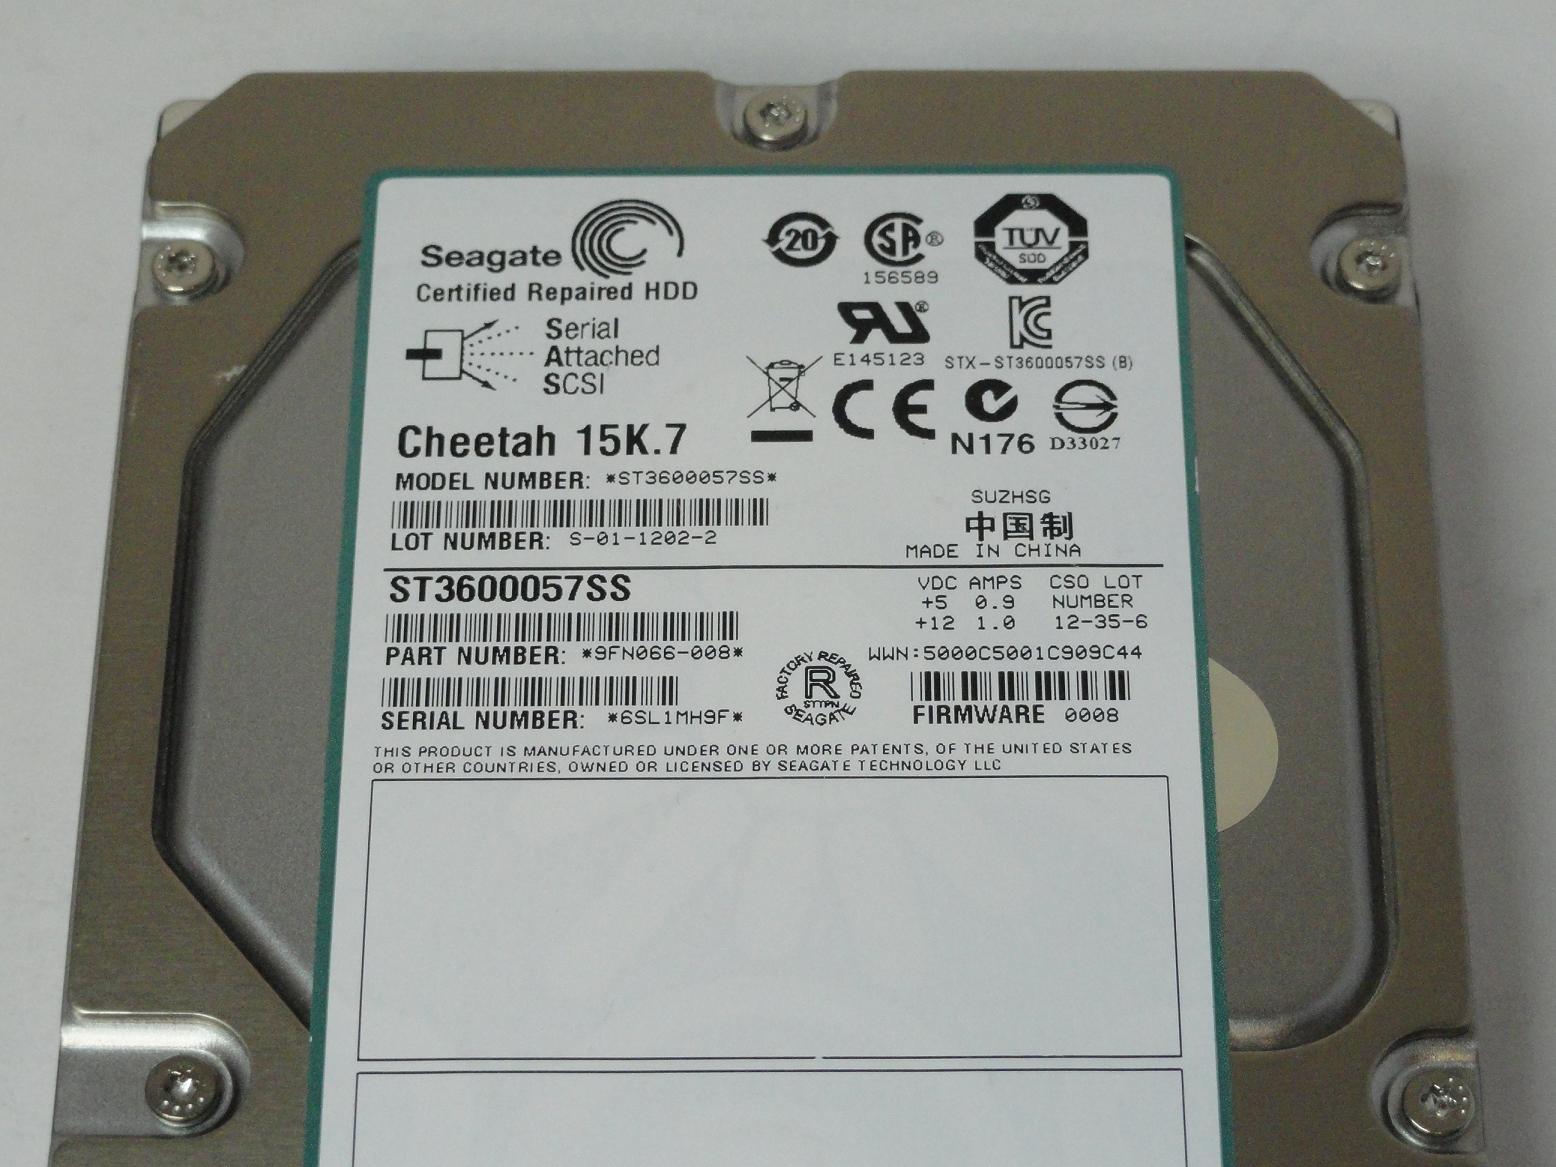 PR25650_9FN066-008_Seagate 600GB SAS 15Krpm 3.5in Recertified HDD - Image3